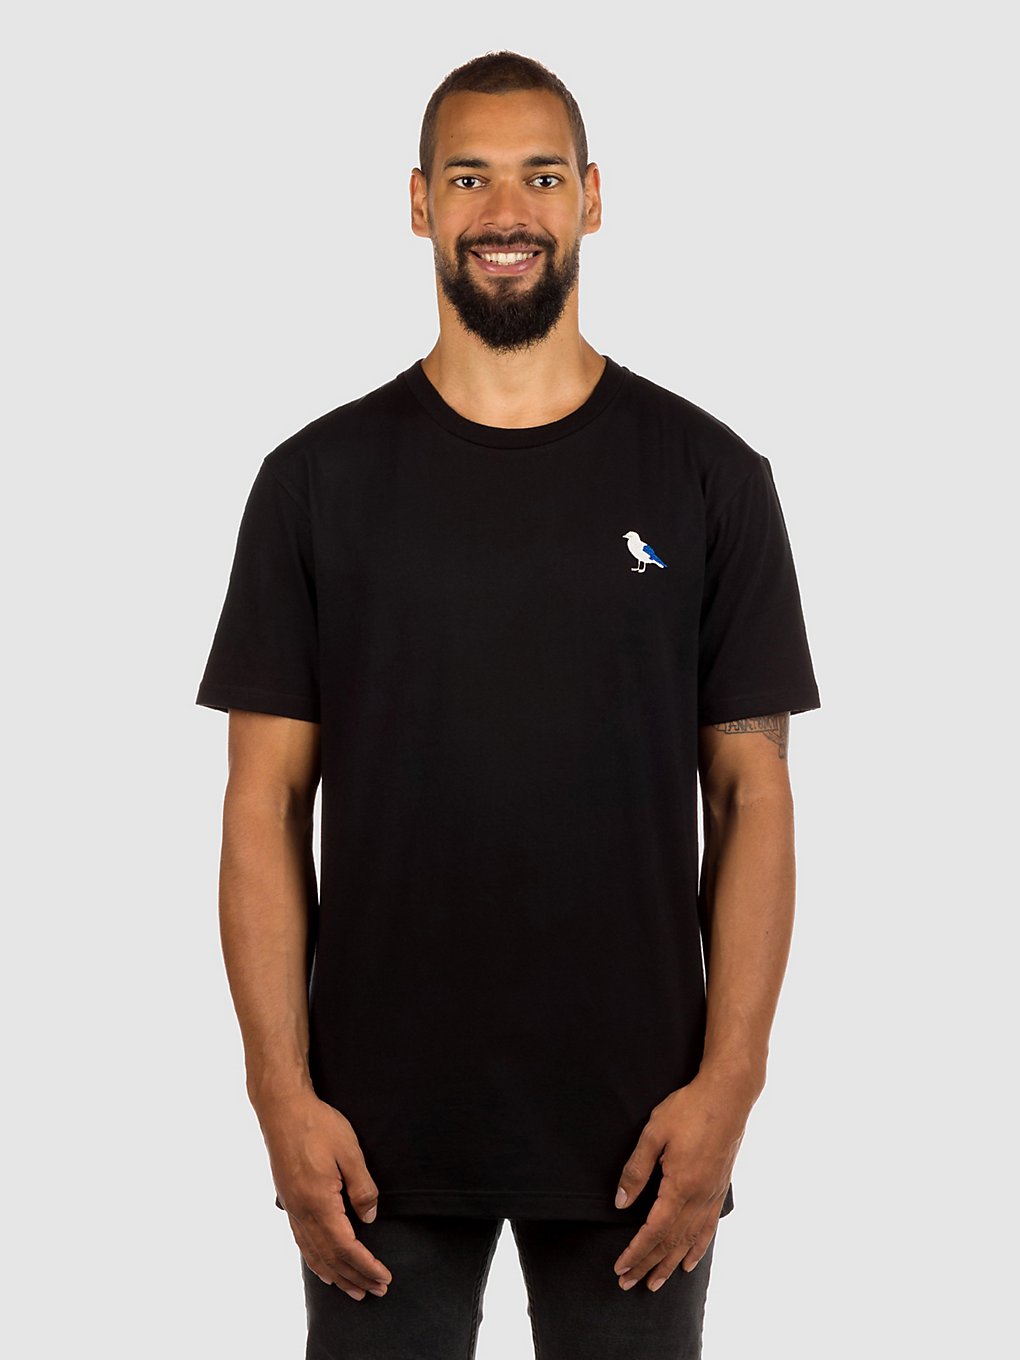 Cleptomanicx Embro Gull T-Shirt black kaufen